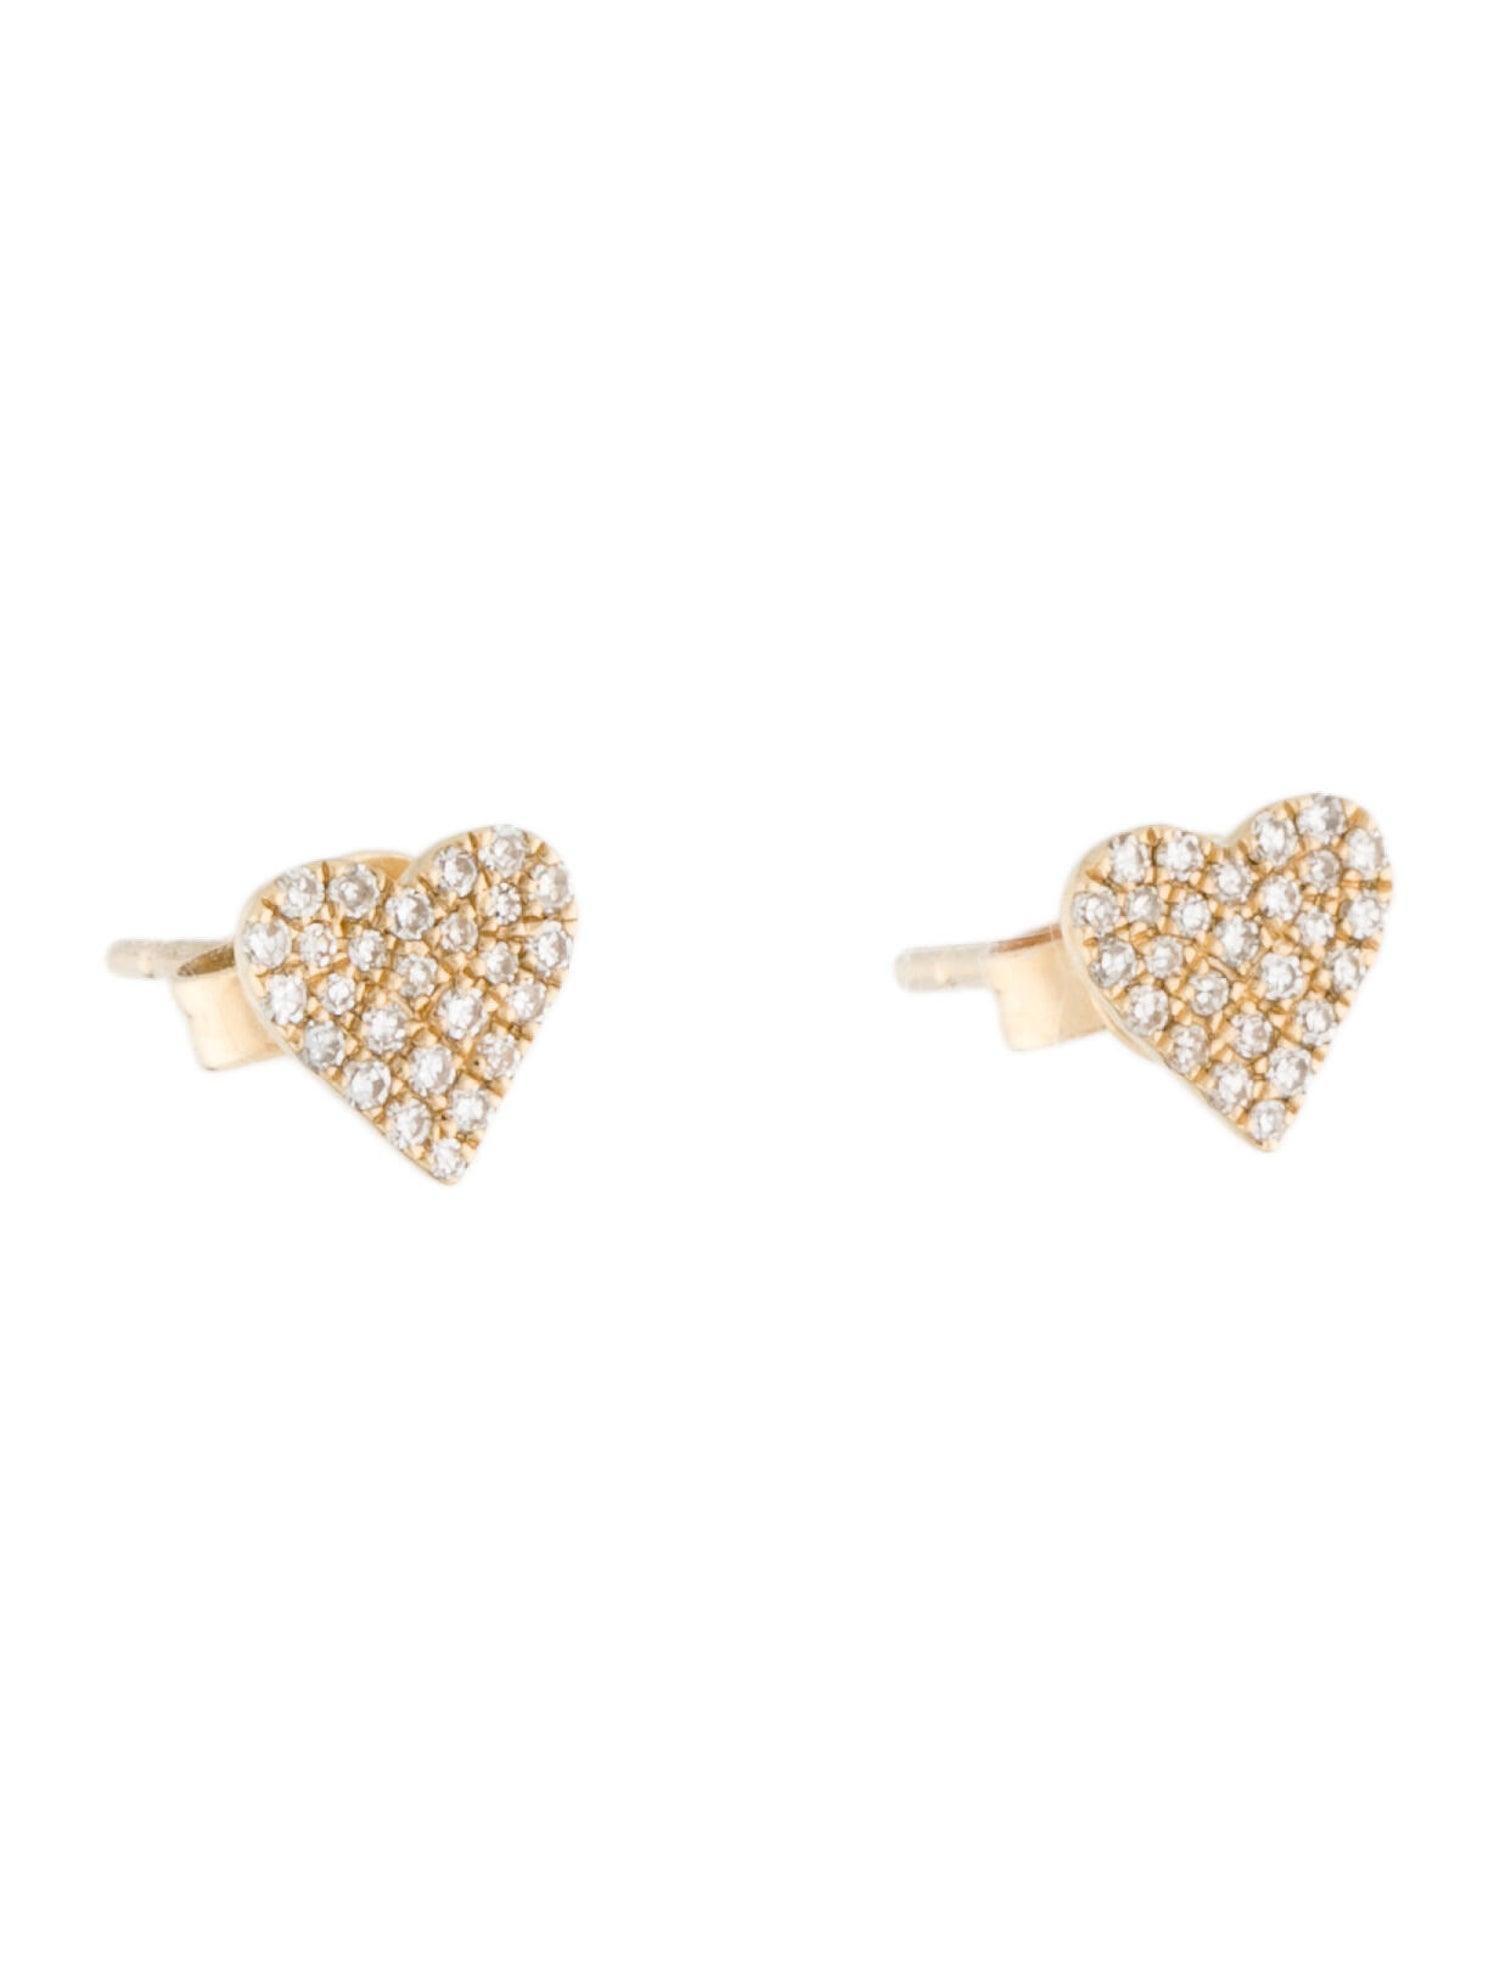 Contemporary 14 Karat Yellow Gold 0.10 Carat Diamond Heart Earrings For Sale